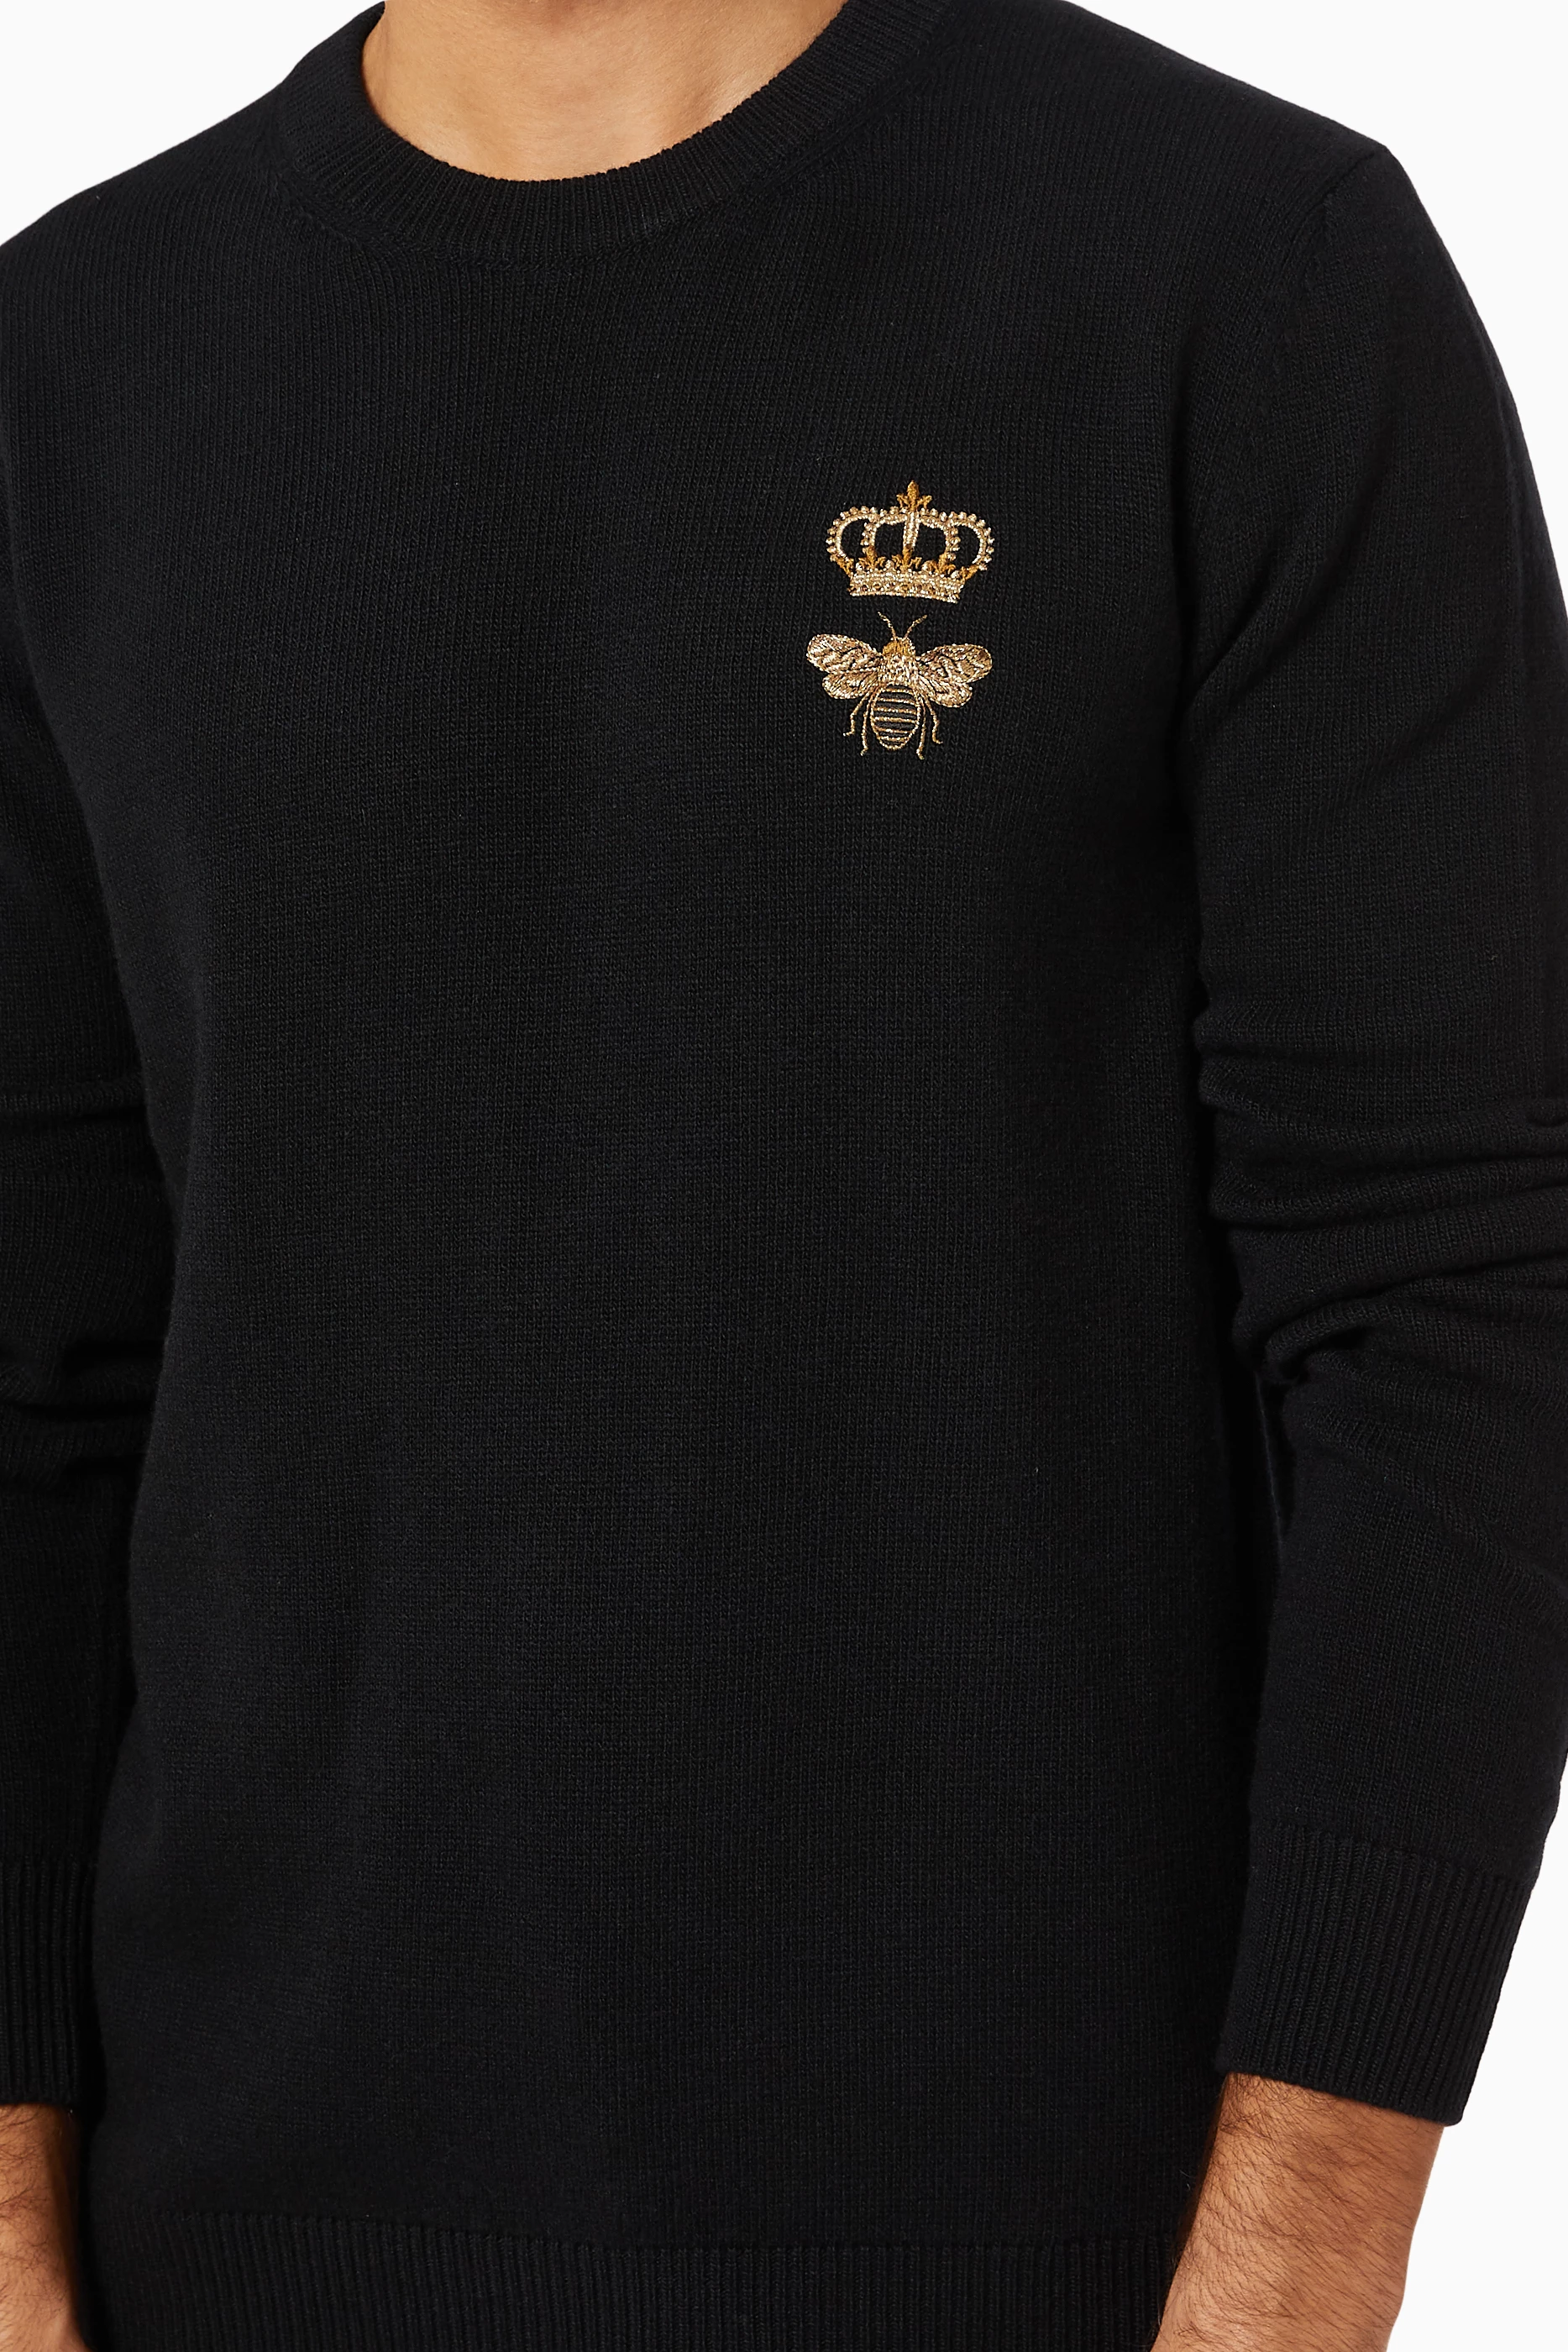 Shop Dolce & Gabbana Black Bee & Crown Embroidery Sweater in Wool for MEN |  Ounass Kuwait